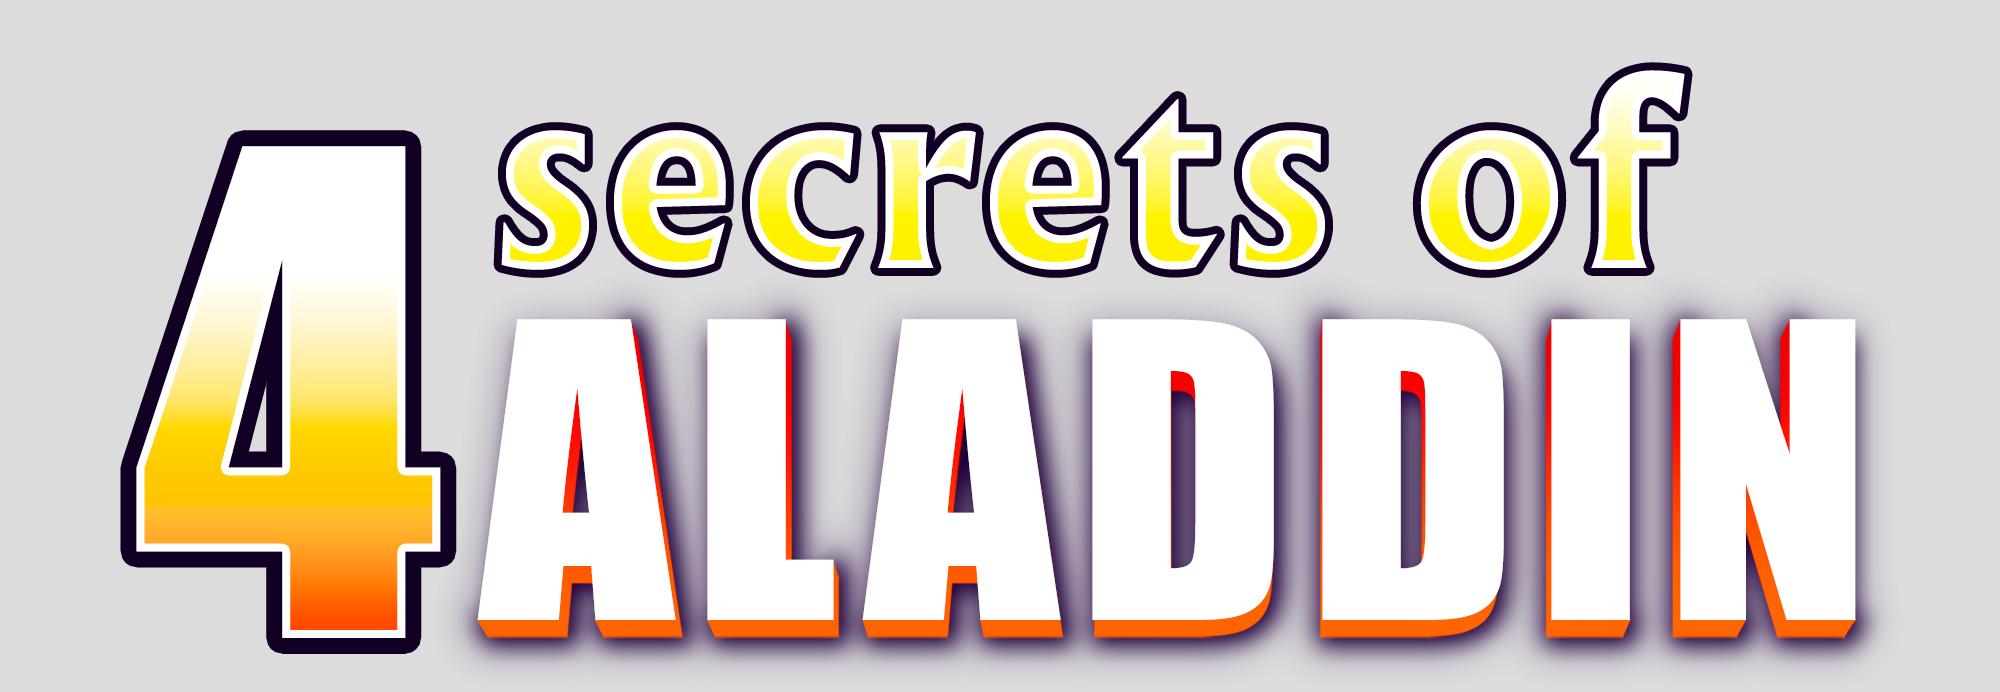 4 Secrets of Aladdin | Промо-материалы | Игровой автомат онлайн